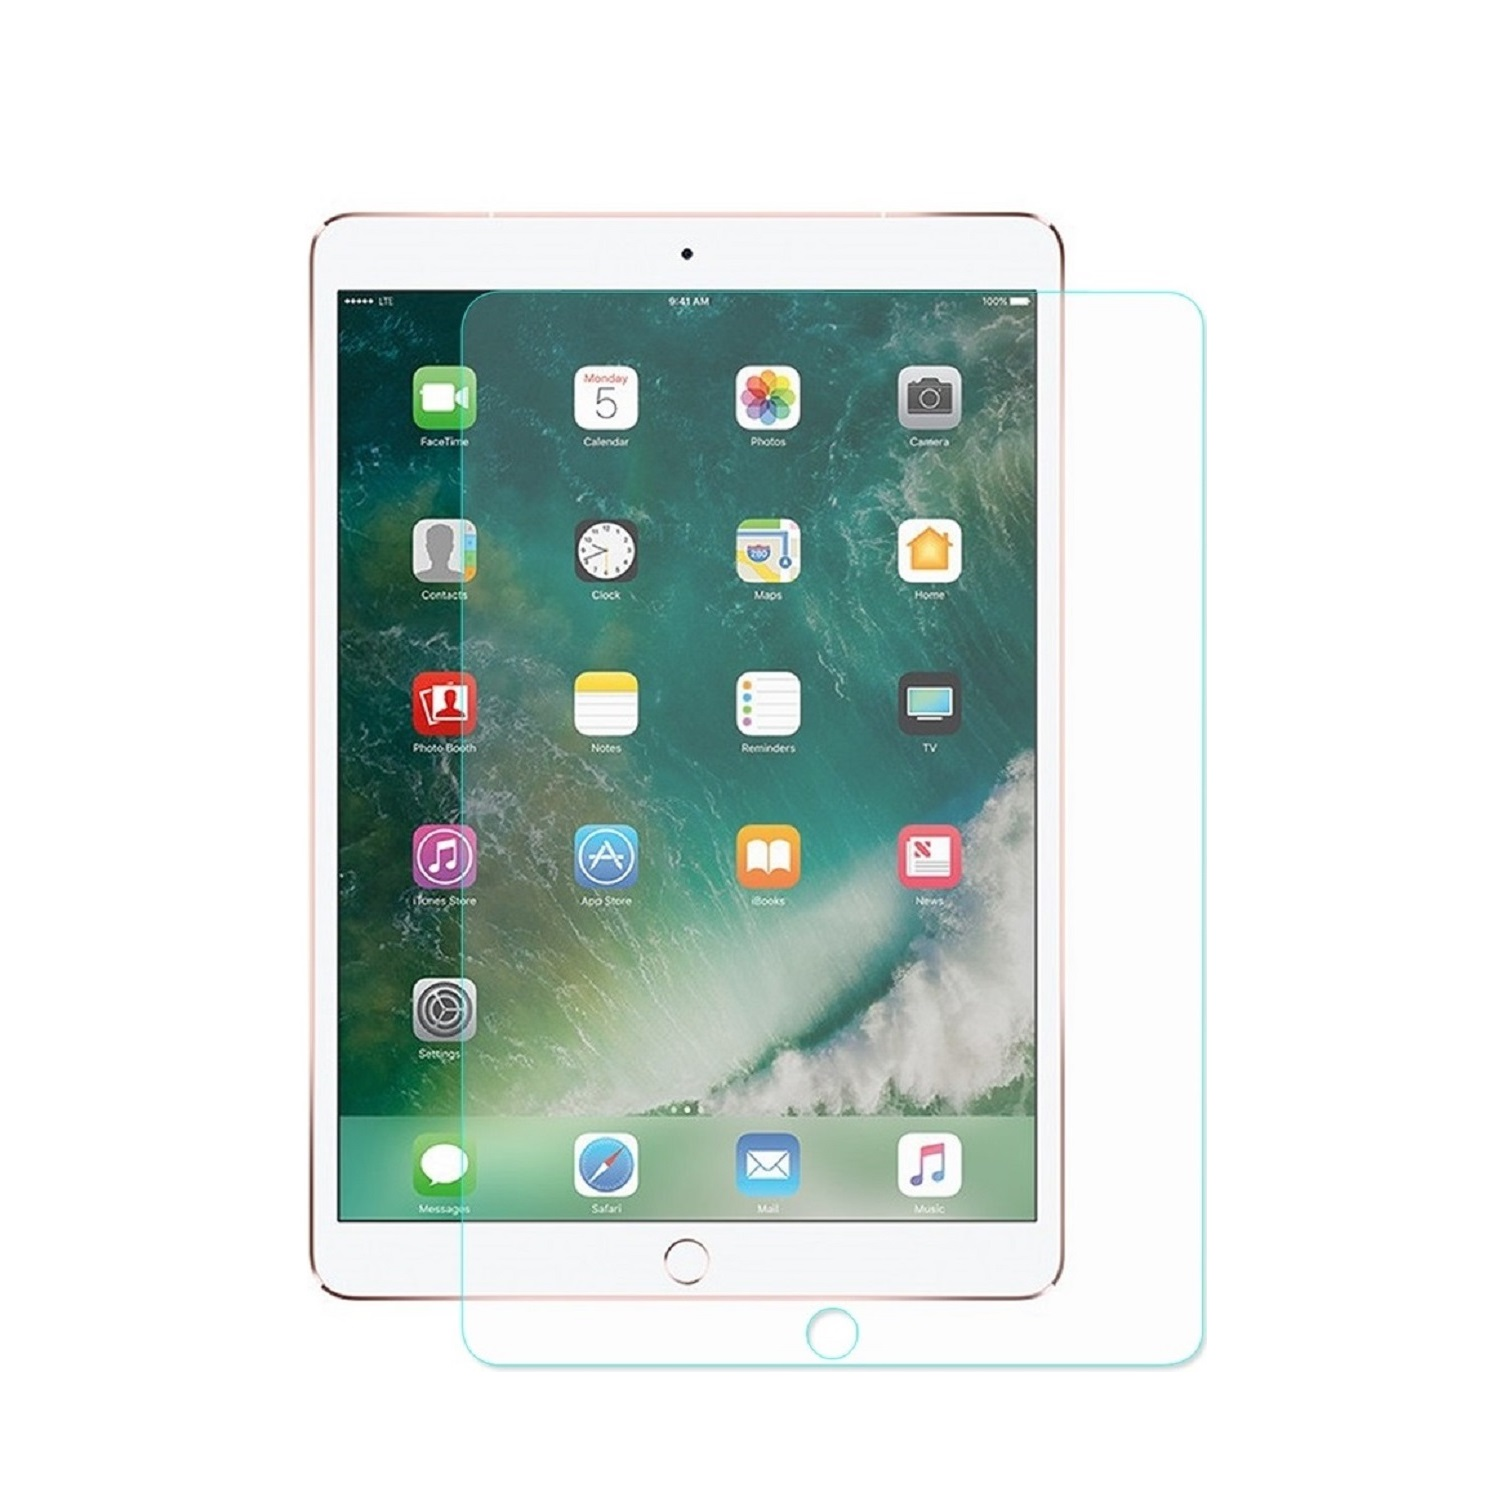 PROTECTORKING 6x iPad 9.7) Apple Schutzfolie Pro Displayschutzfolie(für HD KLAR Displayschutzfolie